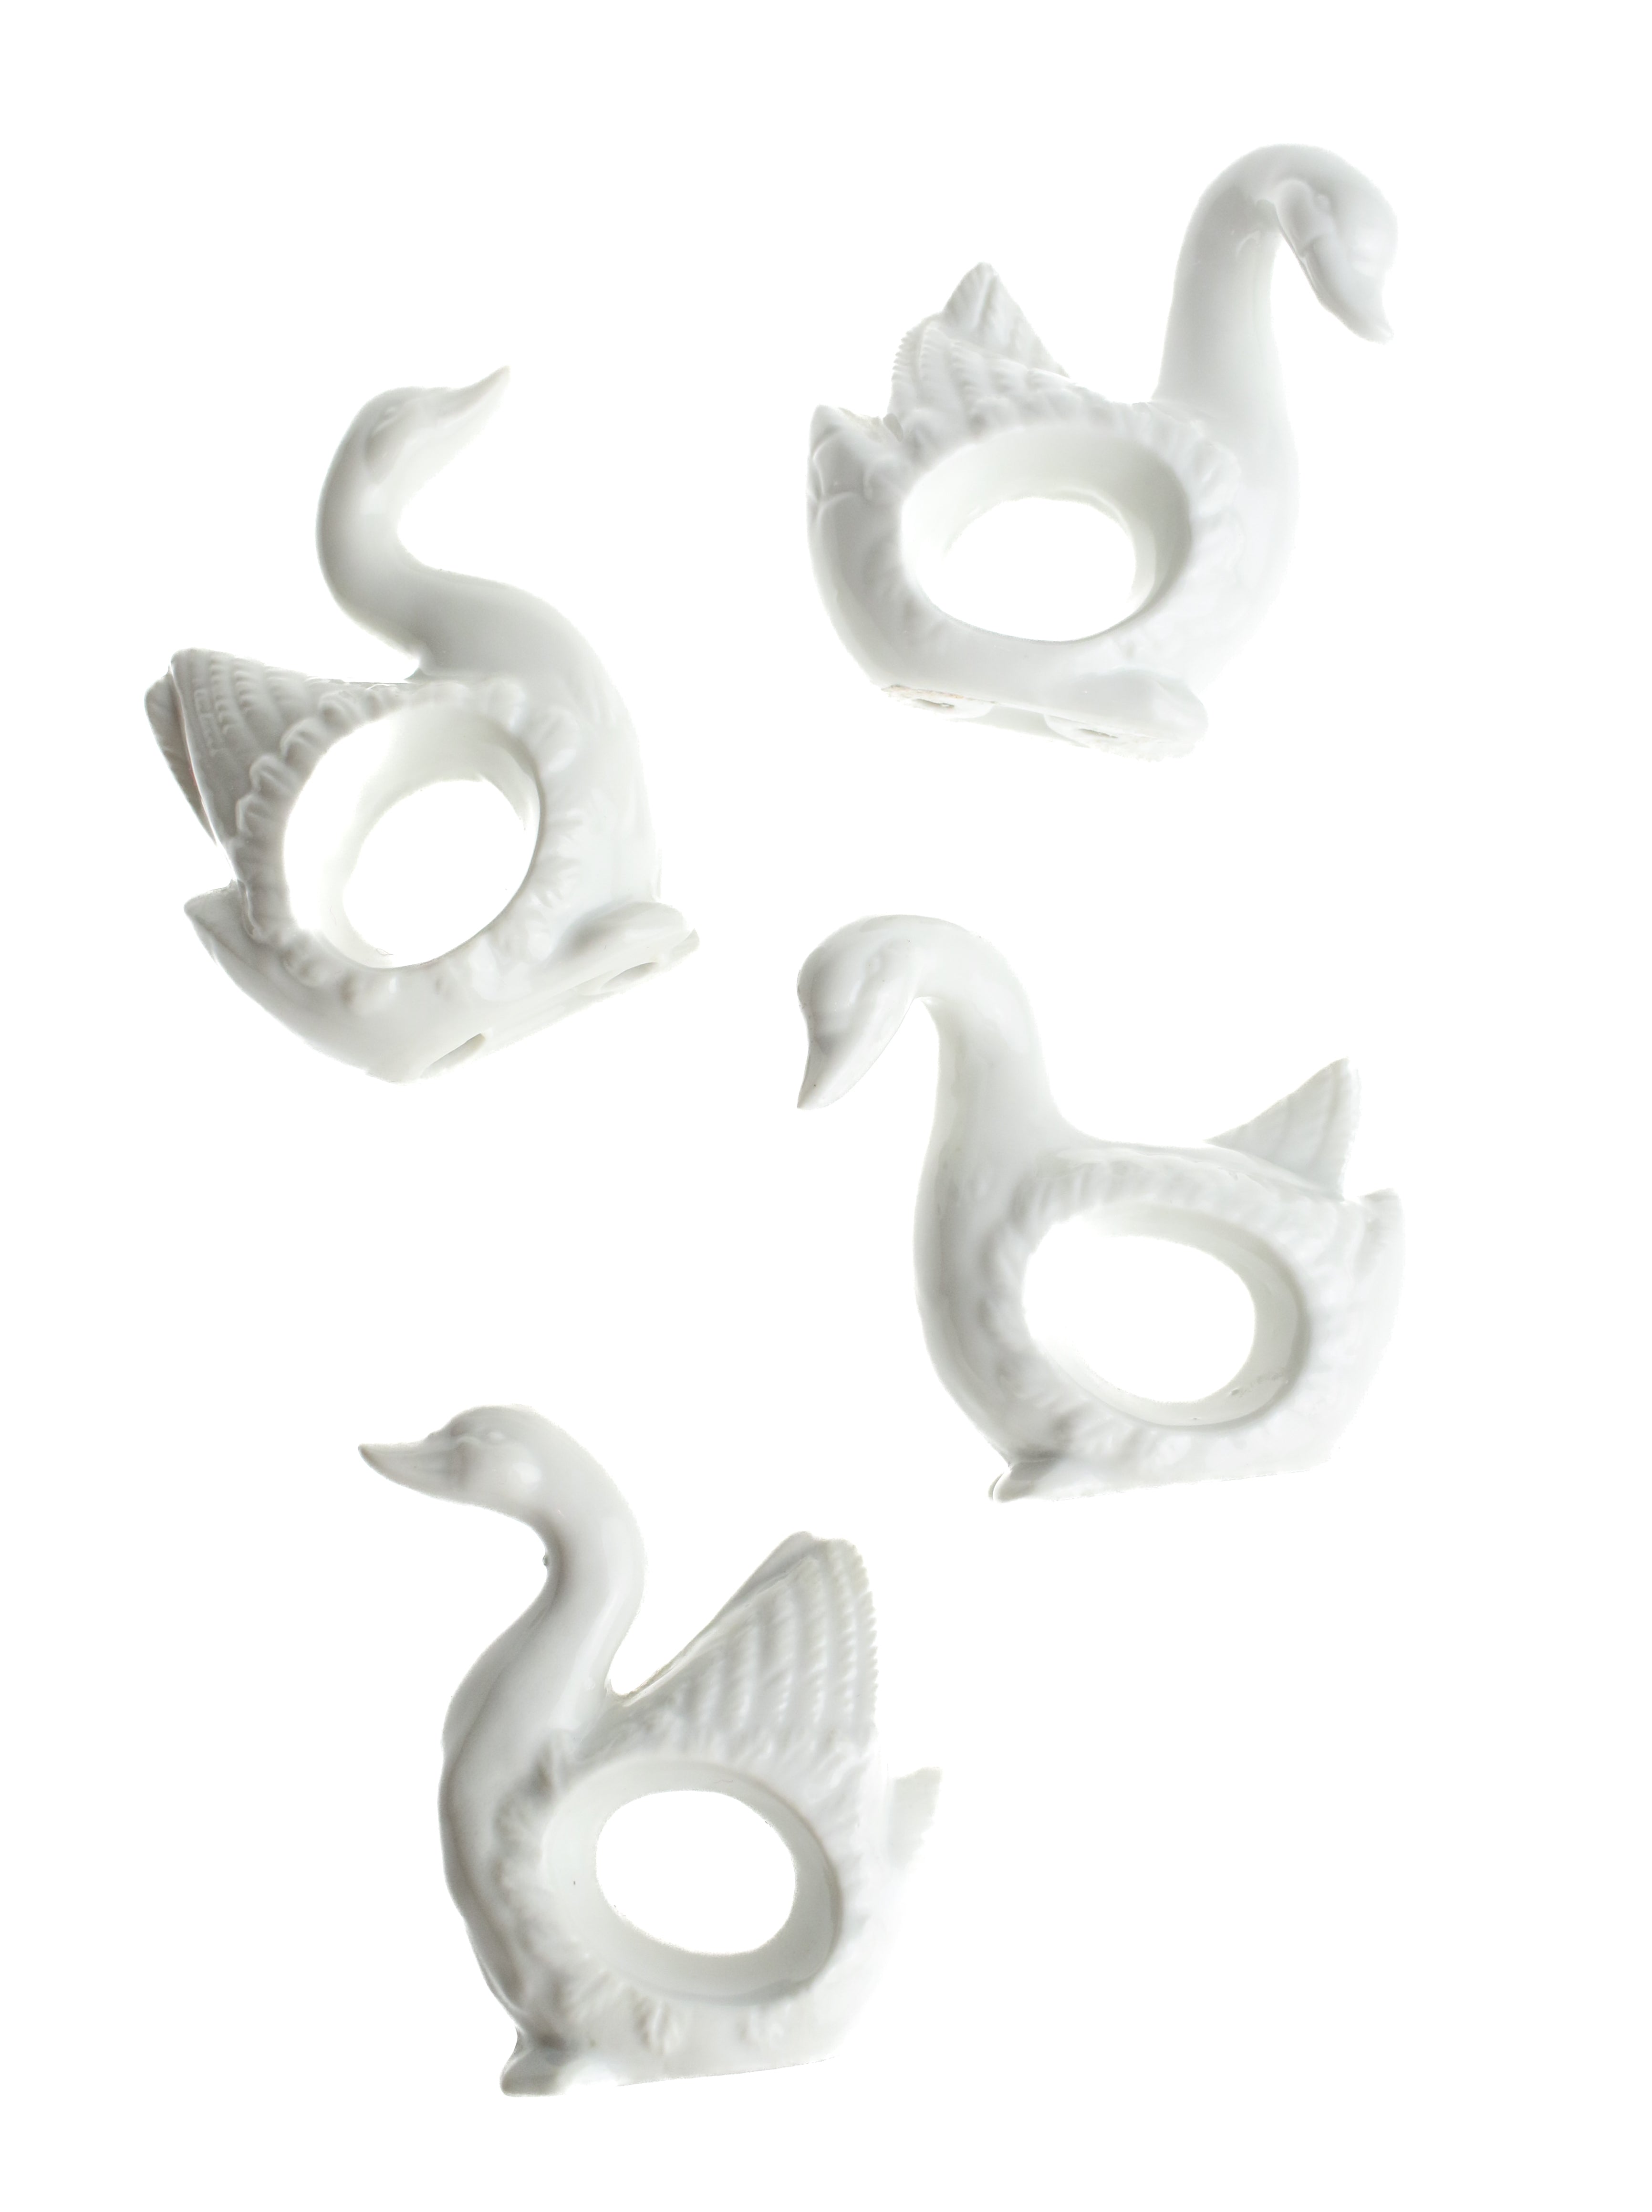 Ceramic Swan Napkin Rings - Set of 4